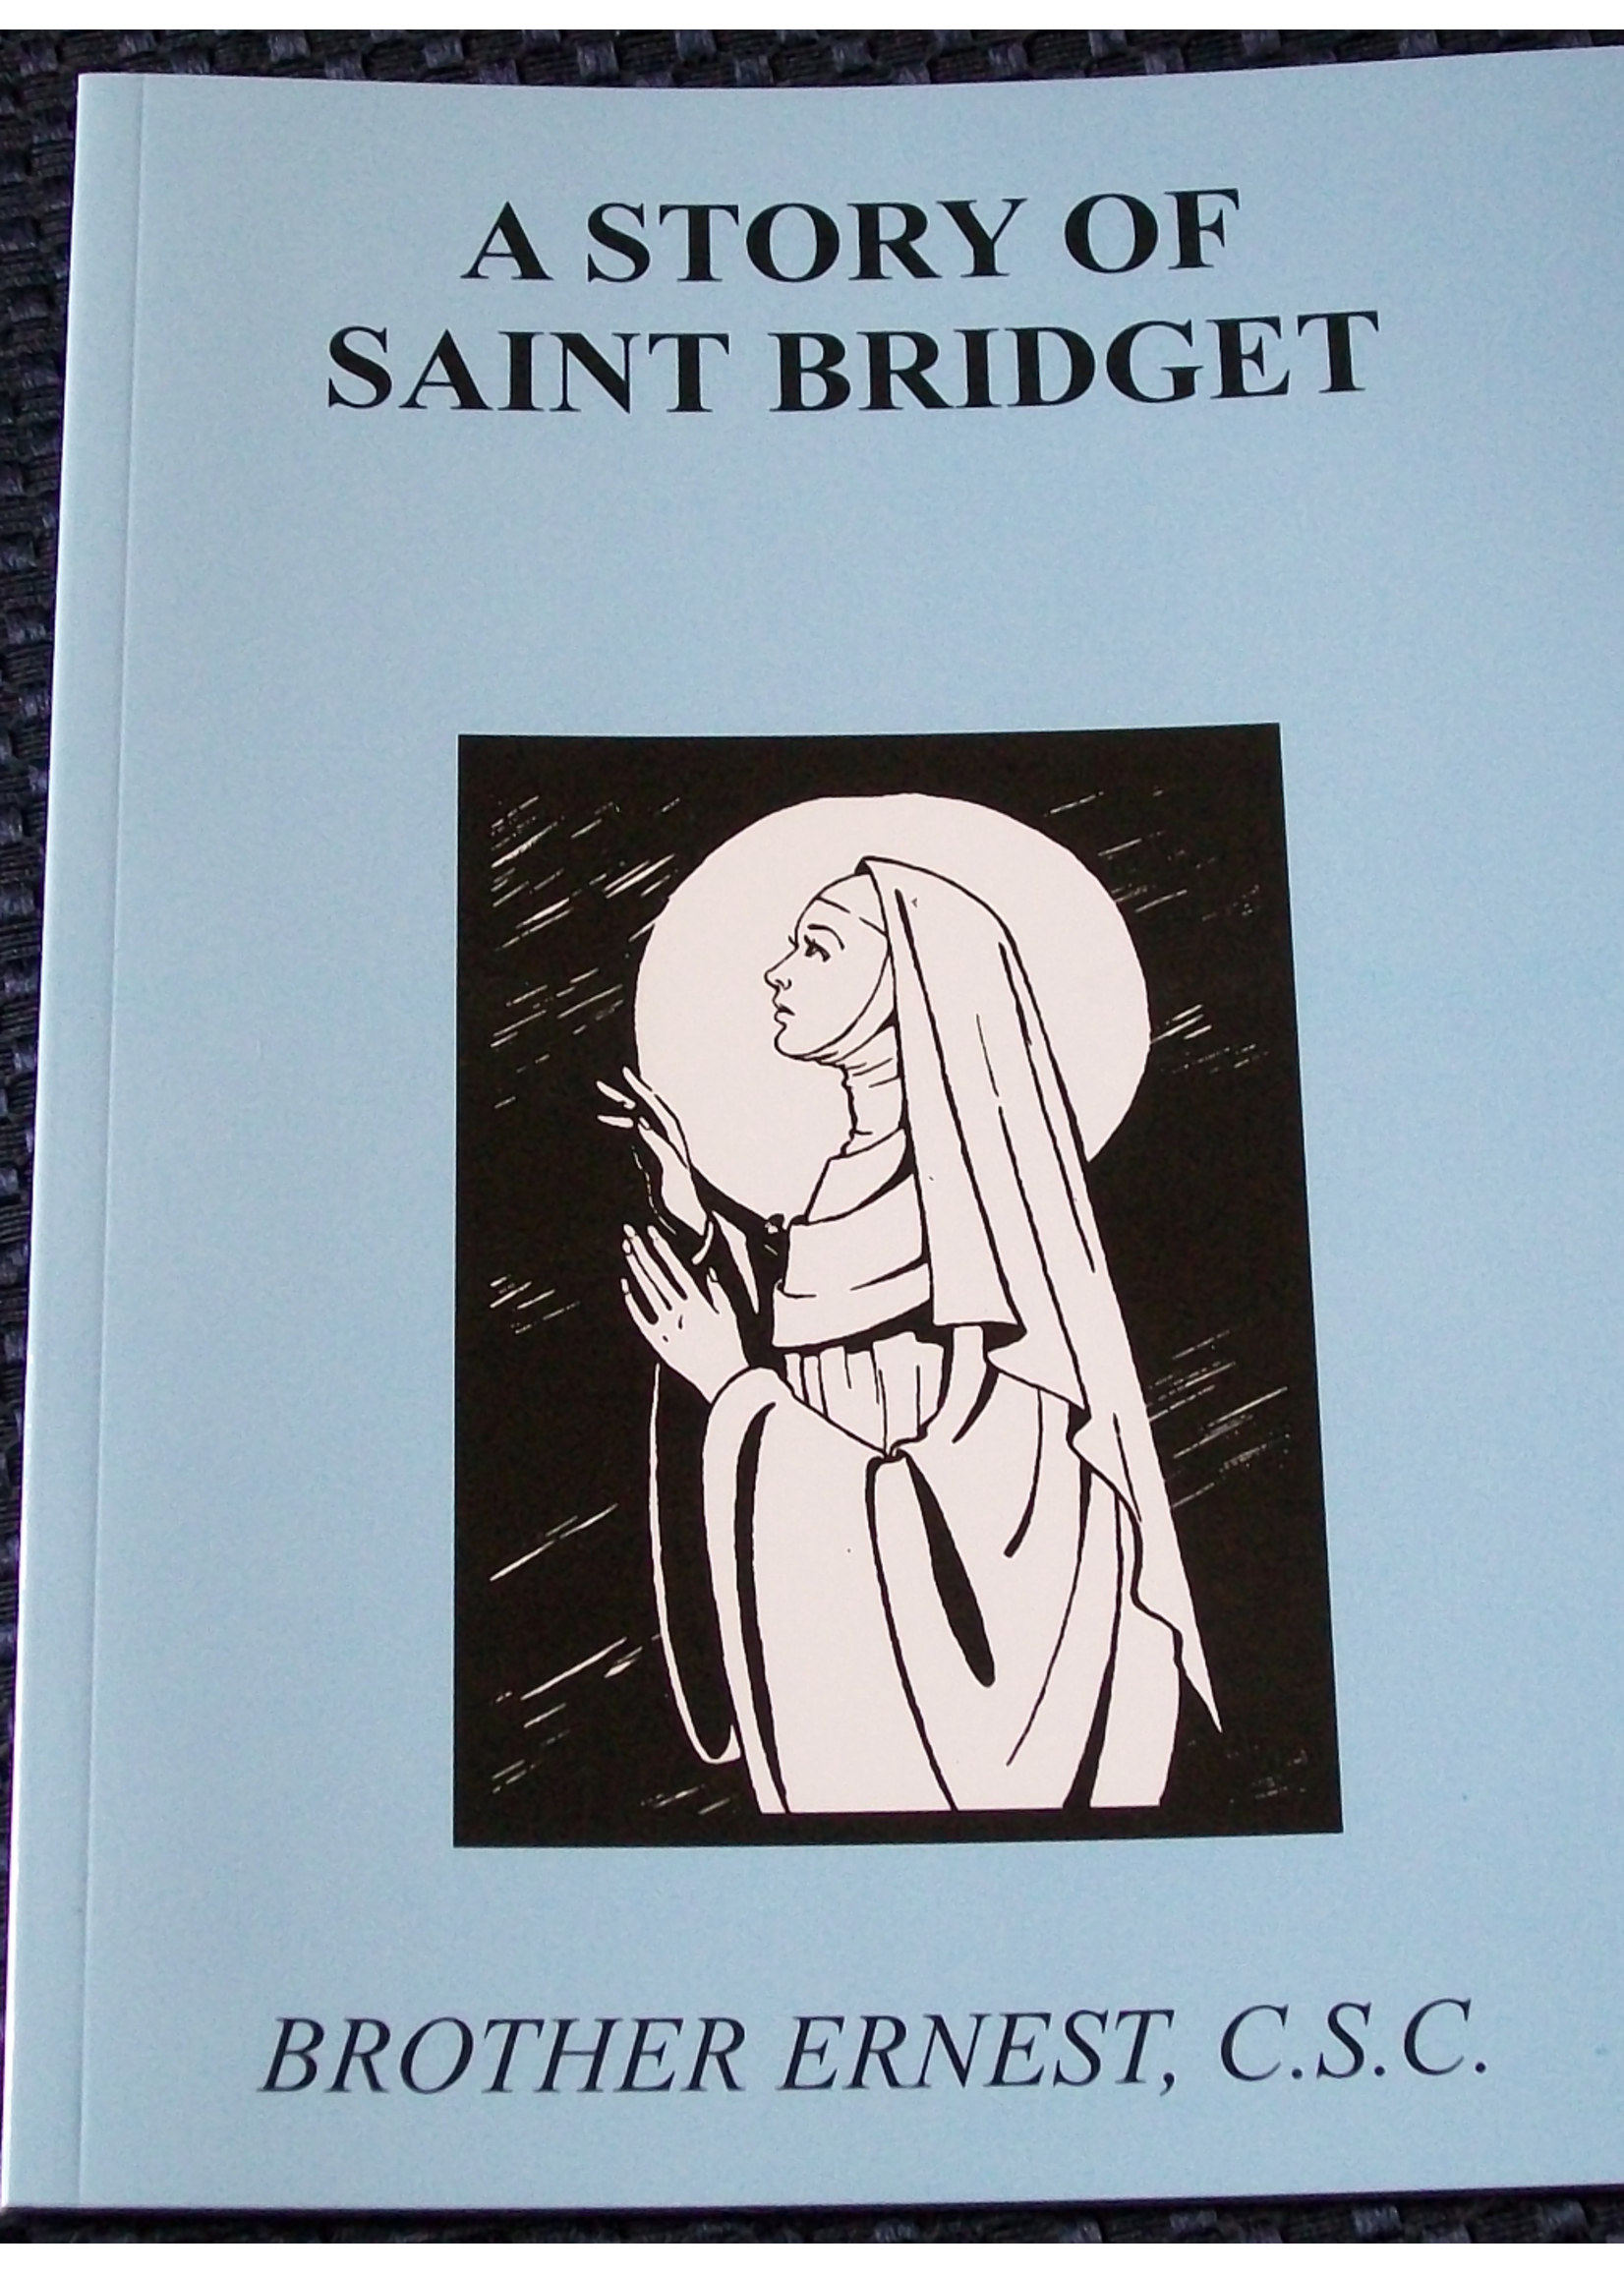 A Story of St Bridget